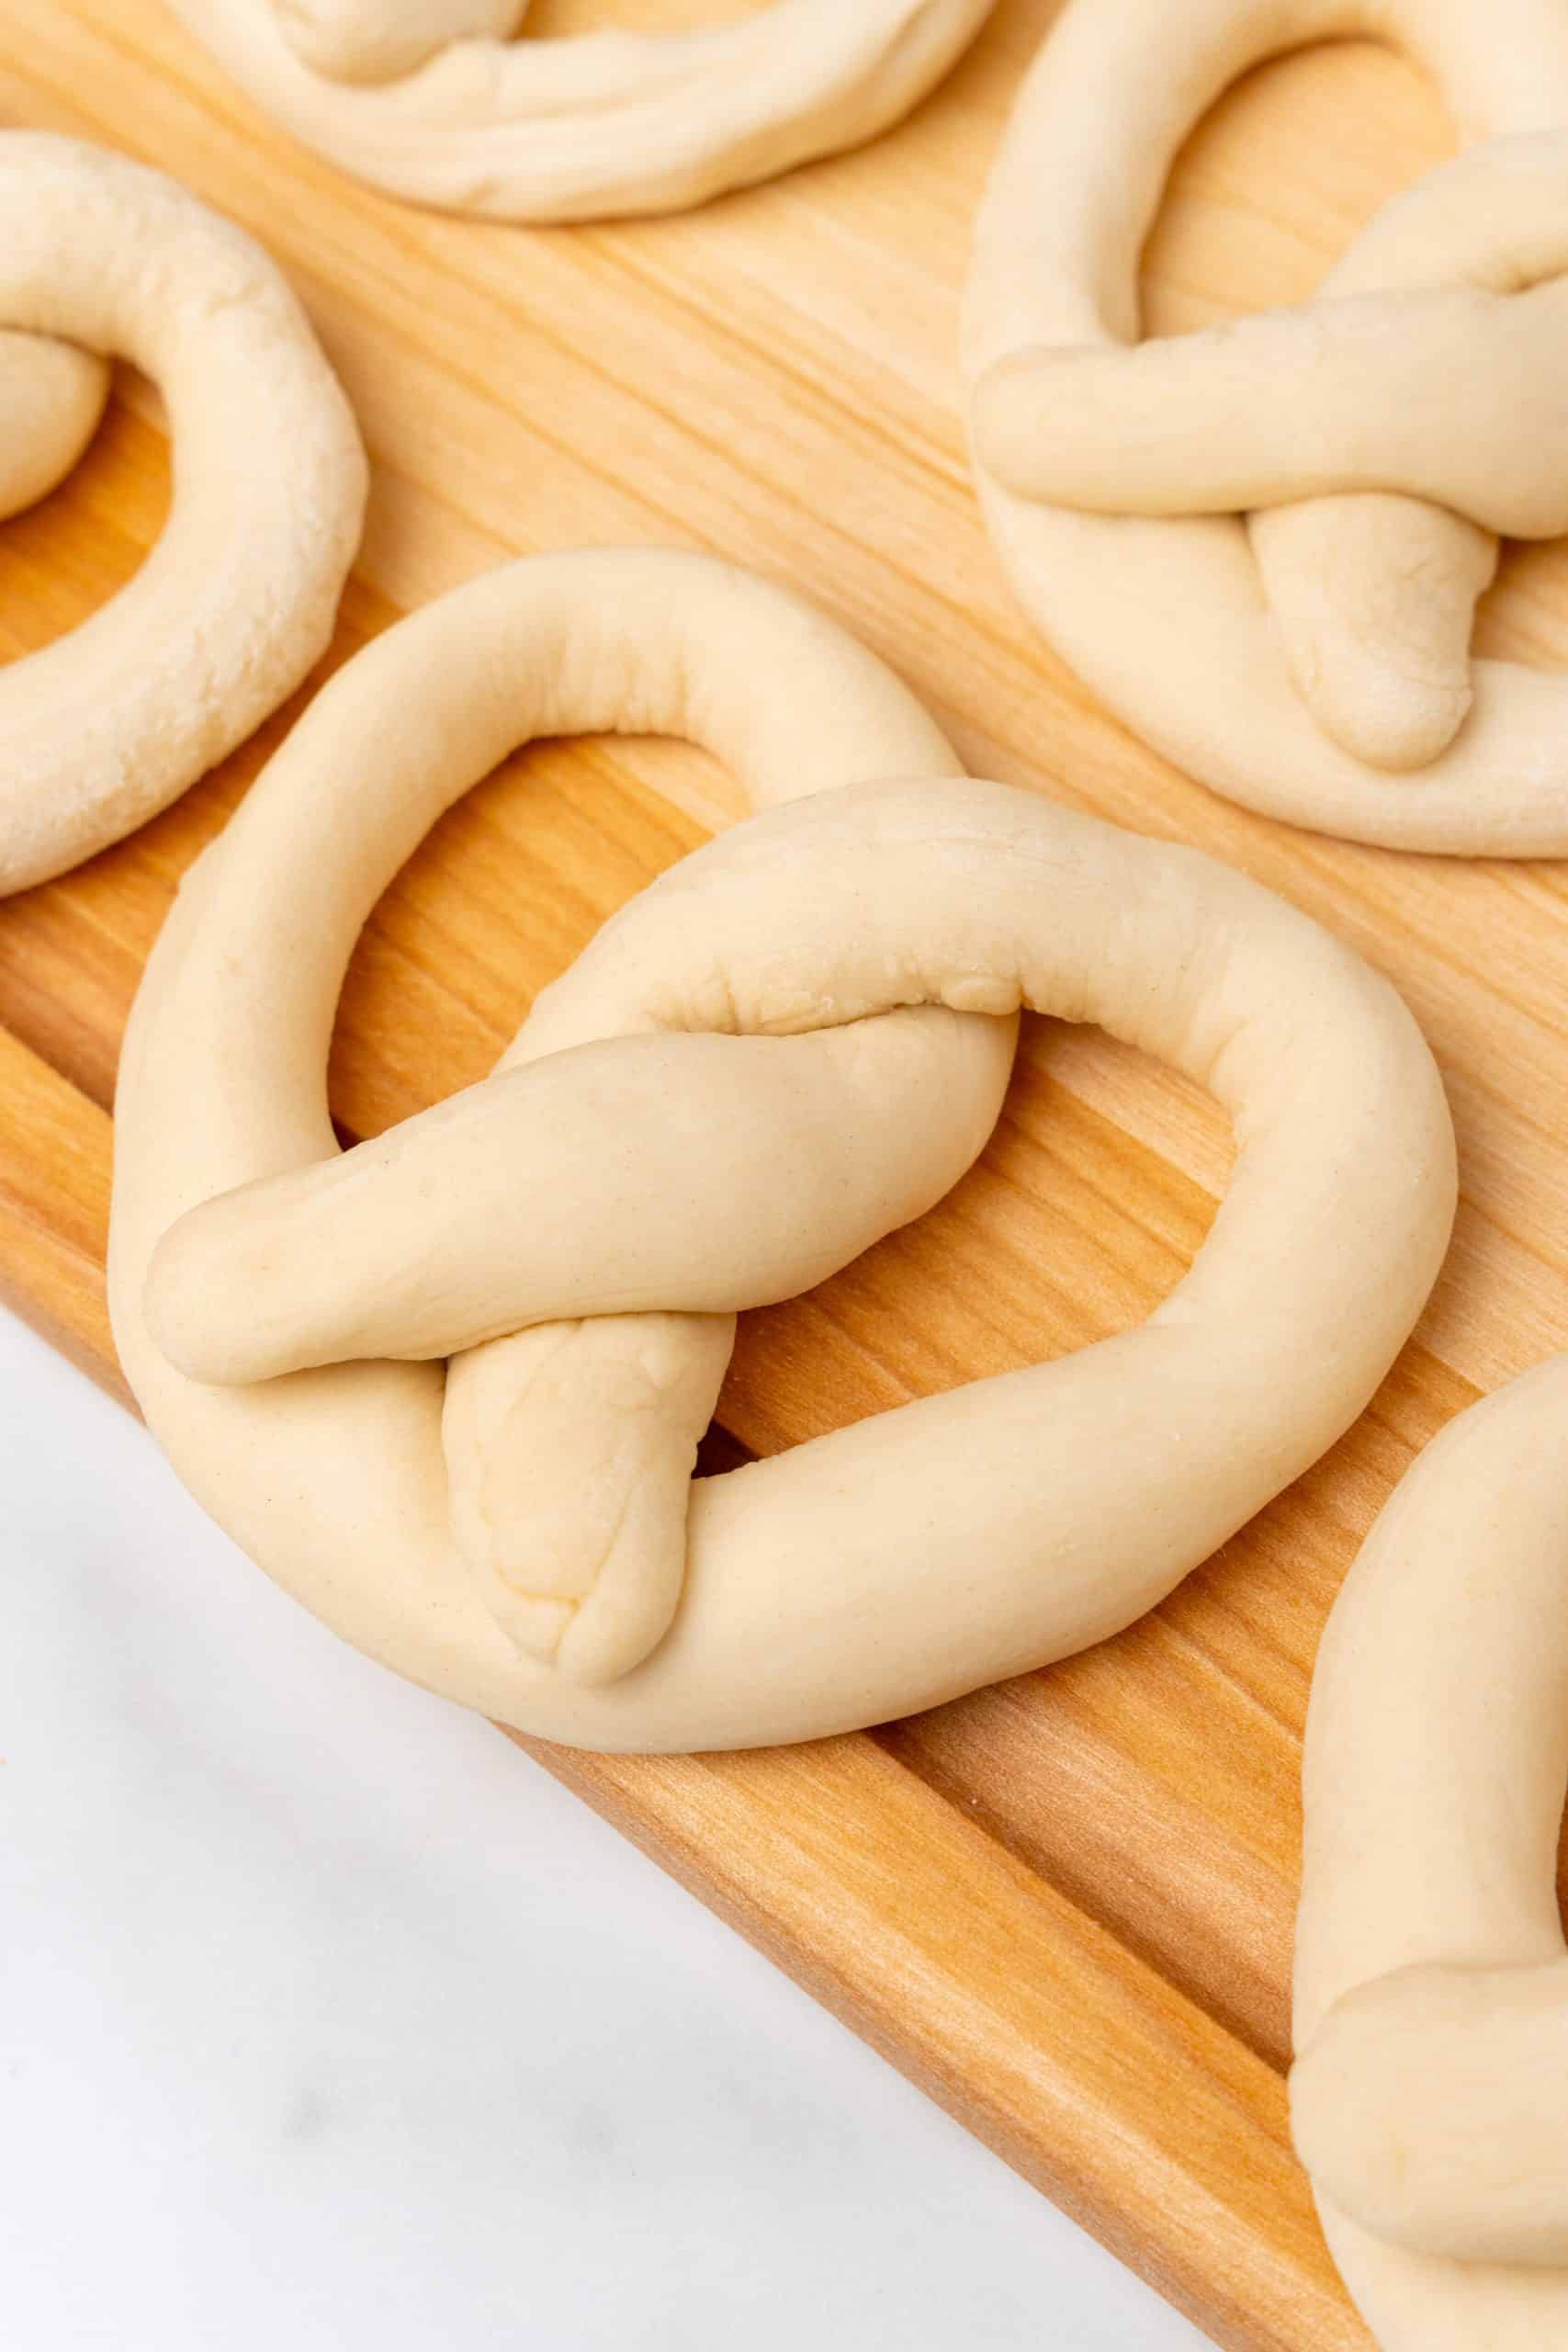 unbaked shaped pretzel dough on a wooden cutting board